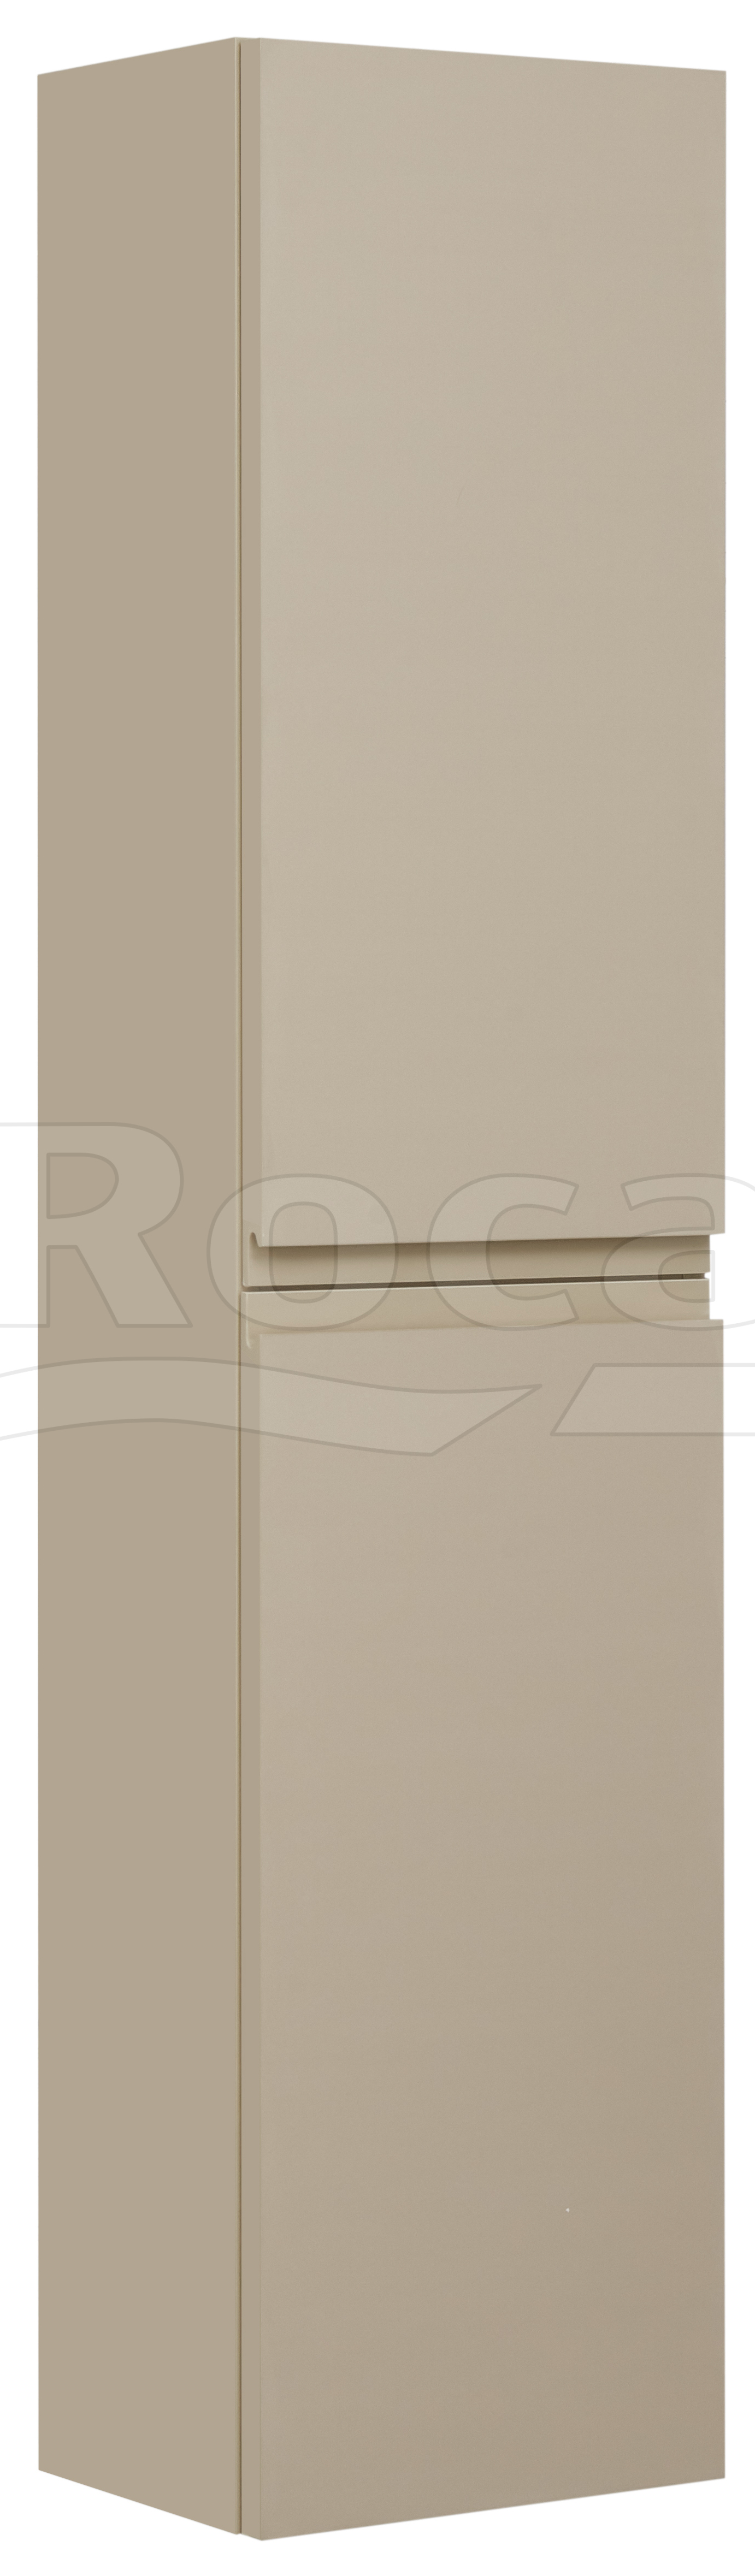 Roca A.8576.5.051.5 OLETA шкаф-колонна 1500 мм,350x257x1500 мм, капучино